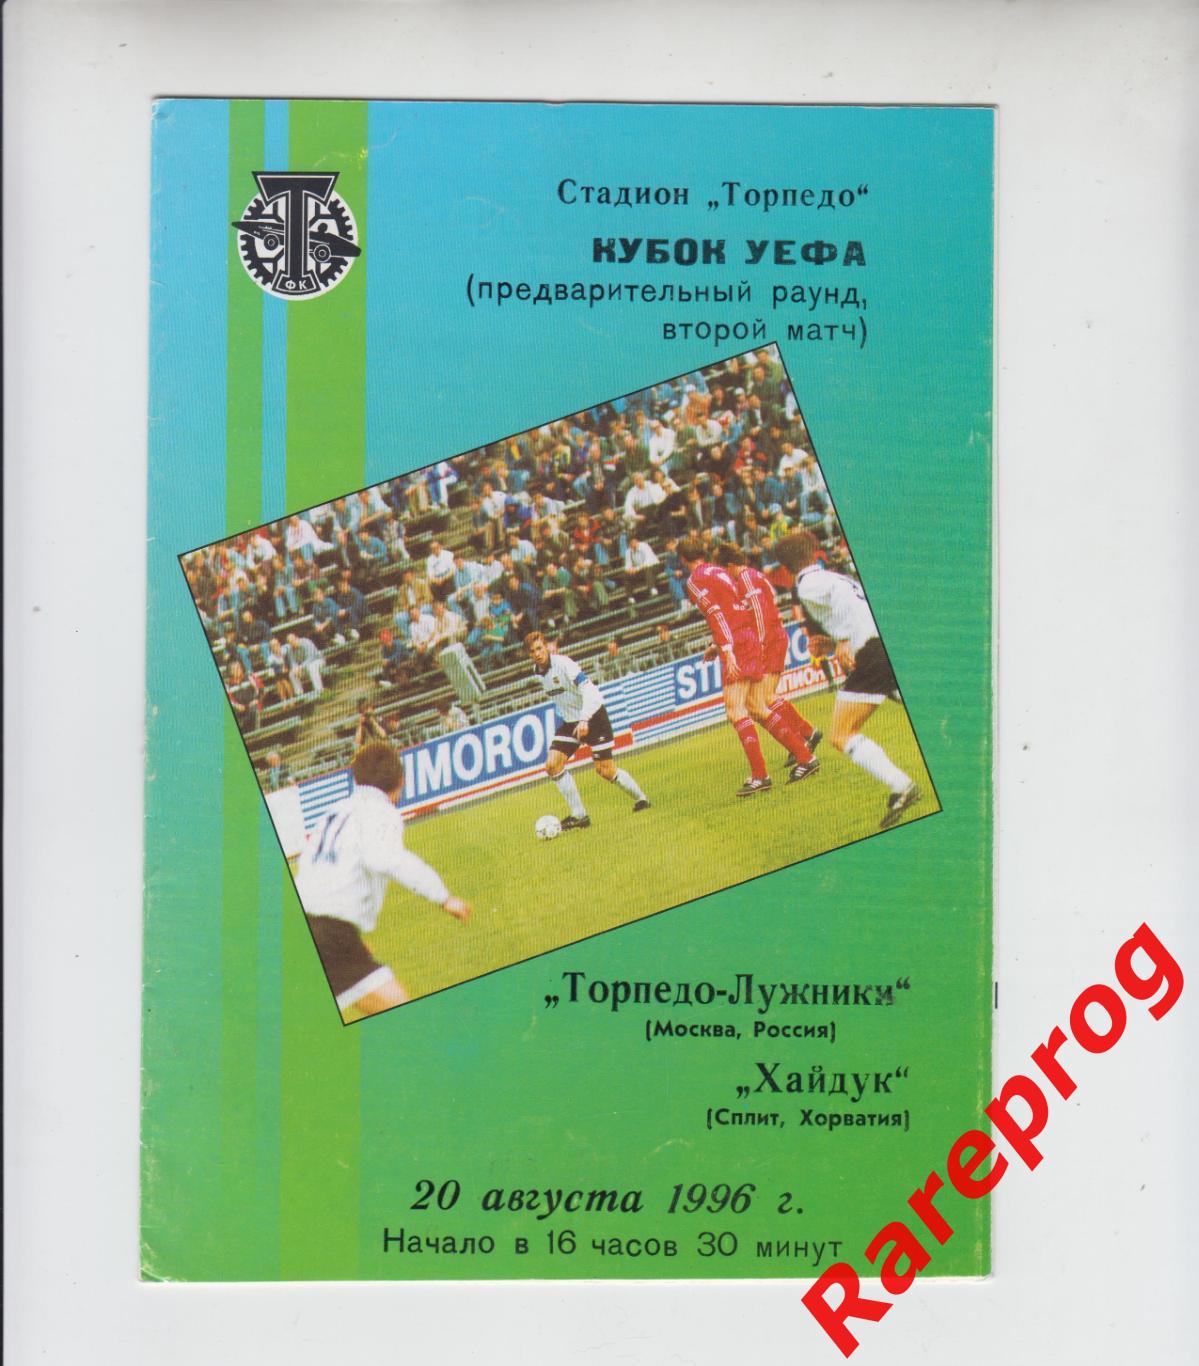 Торпедо Москва Россия - Хайдук Сплит Хорватия 1996 кубок УЕФА